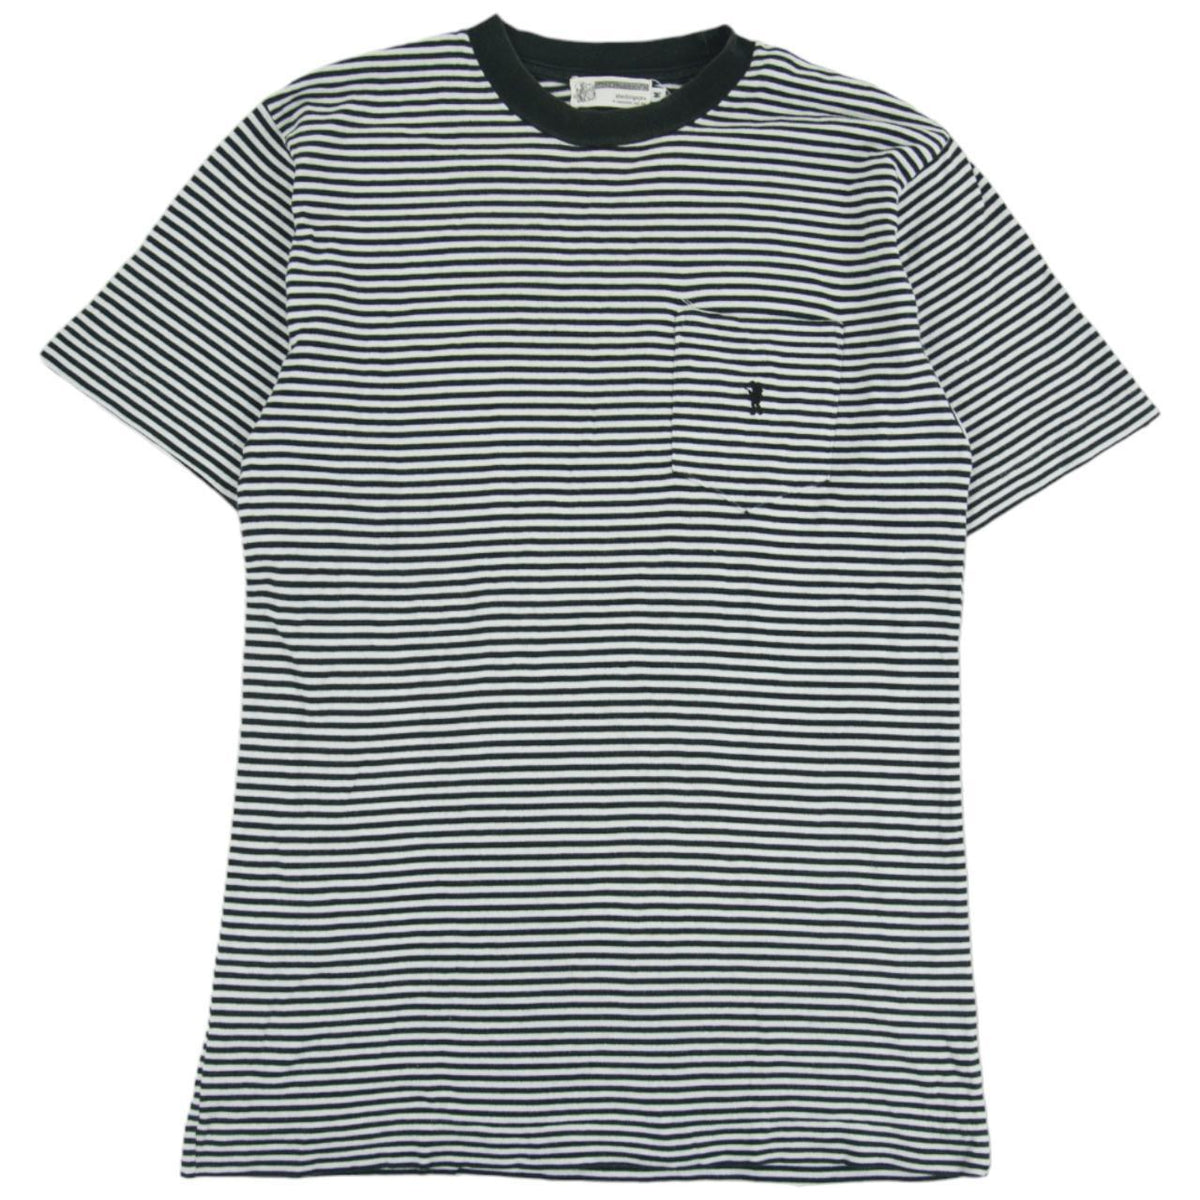 Vintage BAPE Striped T Shirt Size S